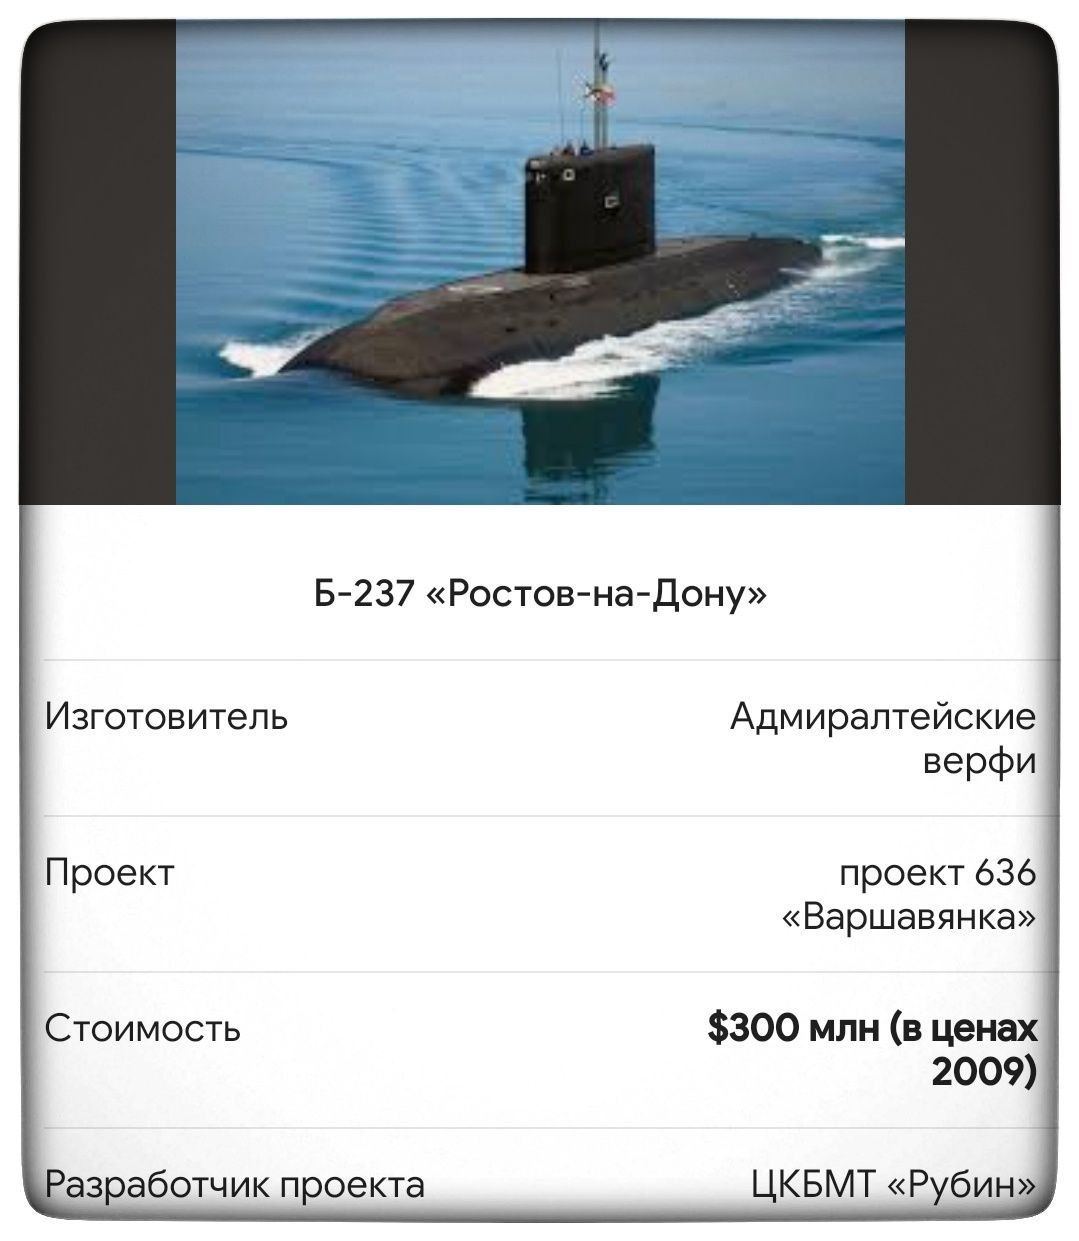 Ukraine Hits Russian Naval Forces In Sevastopol, Submarine Damaged